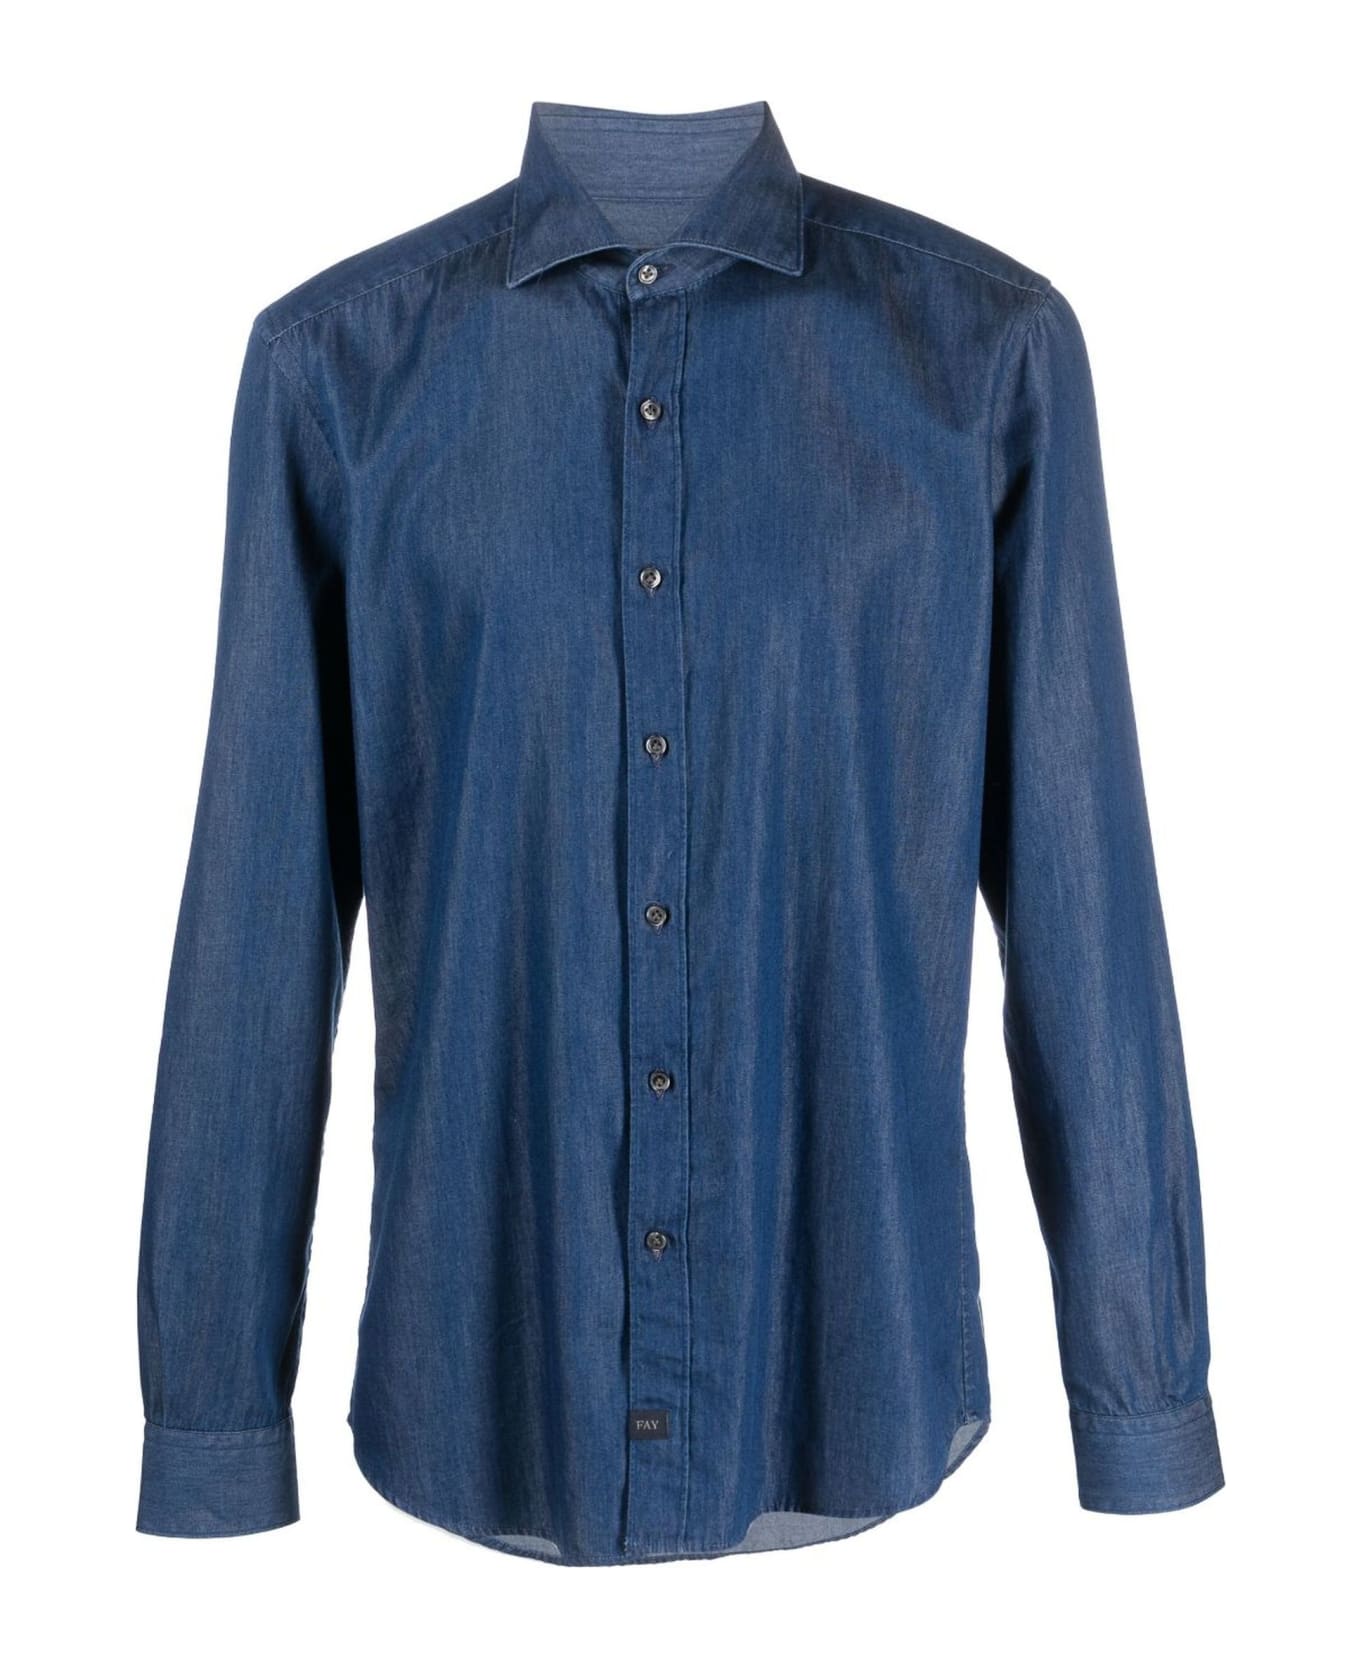 Fay Navy Blue Cotton Denim Shirt - Blue